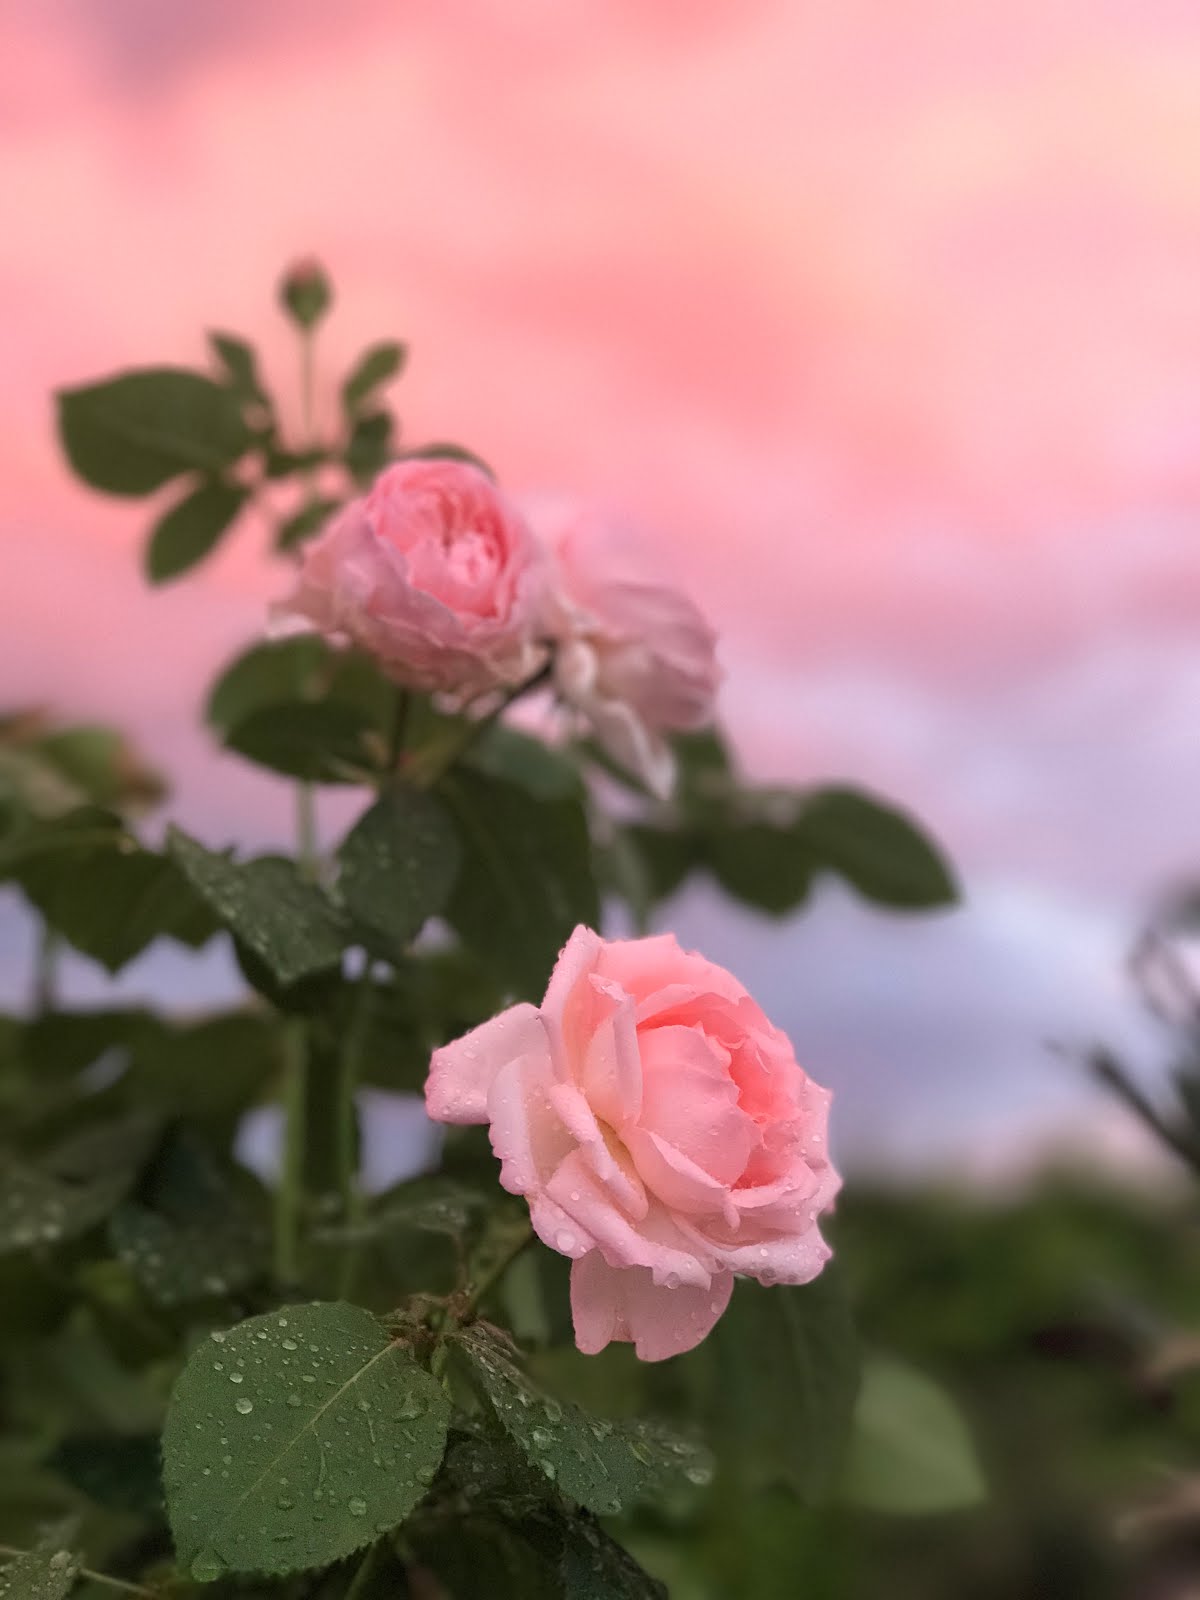 Rosa himmel